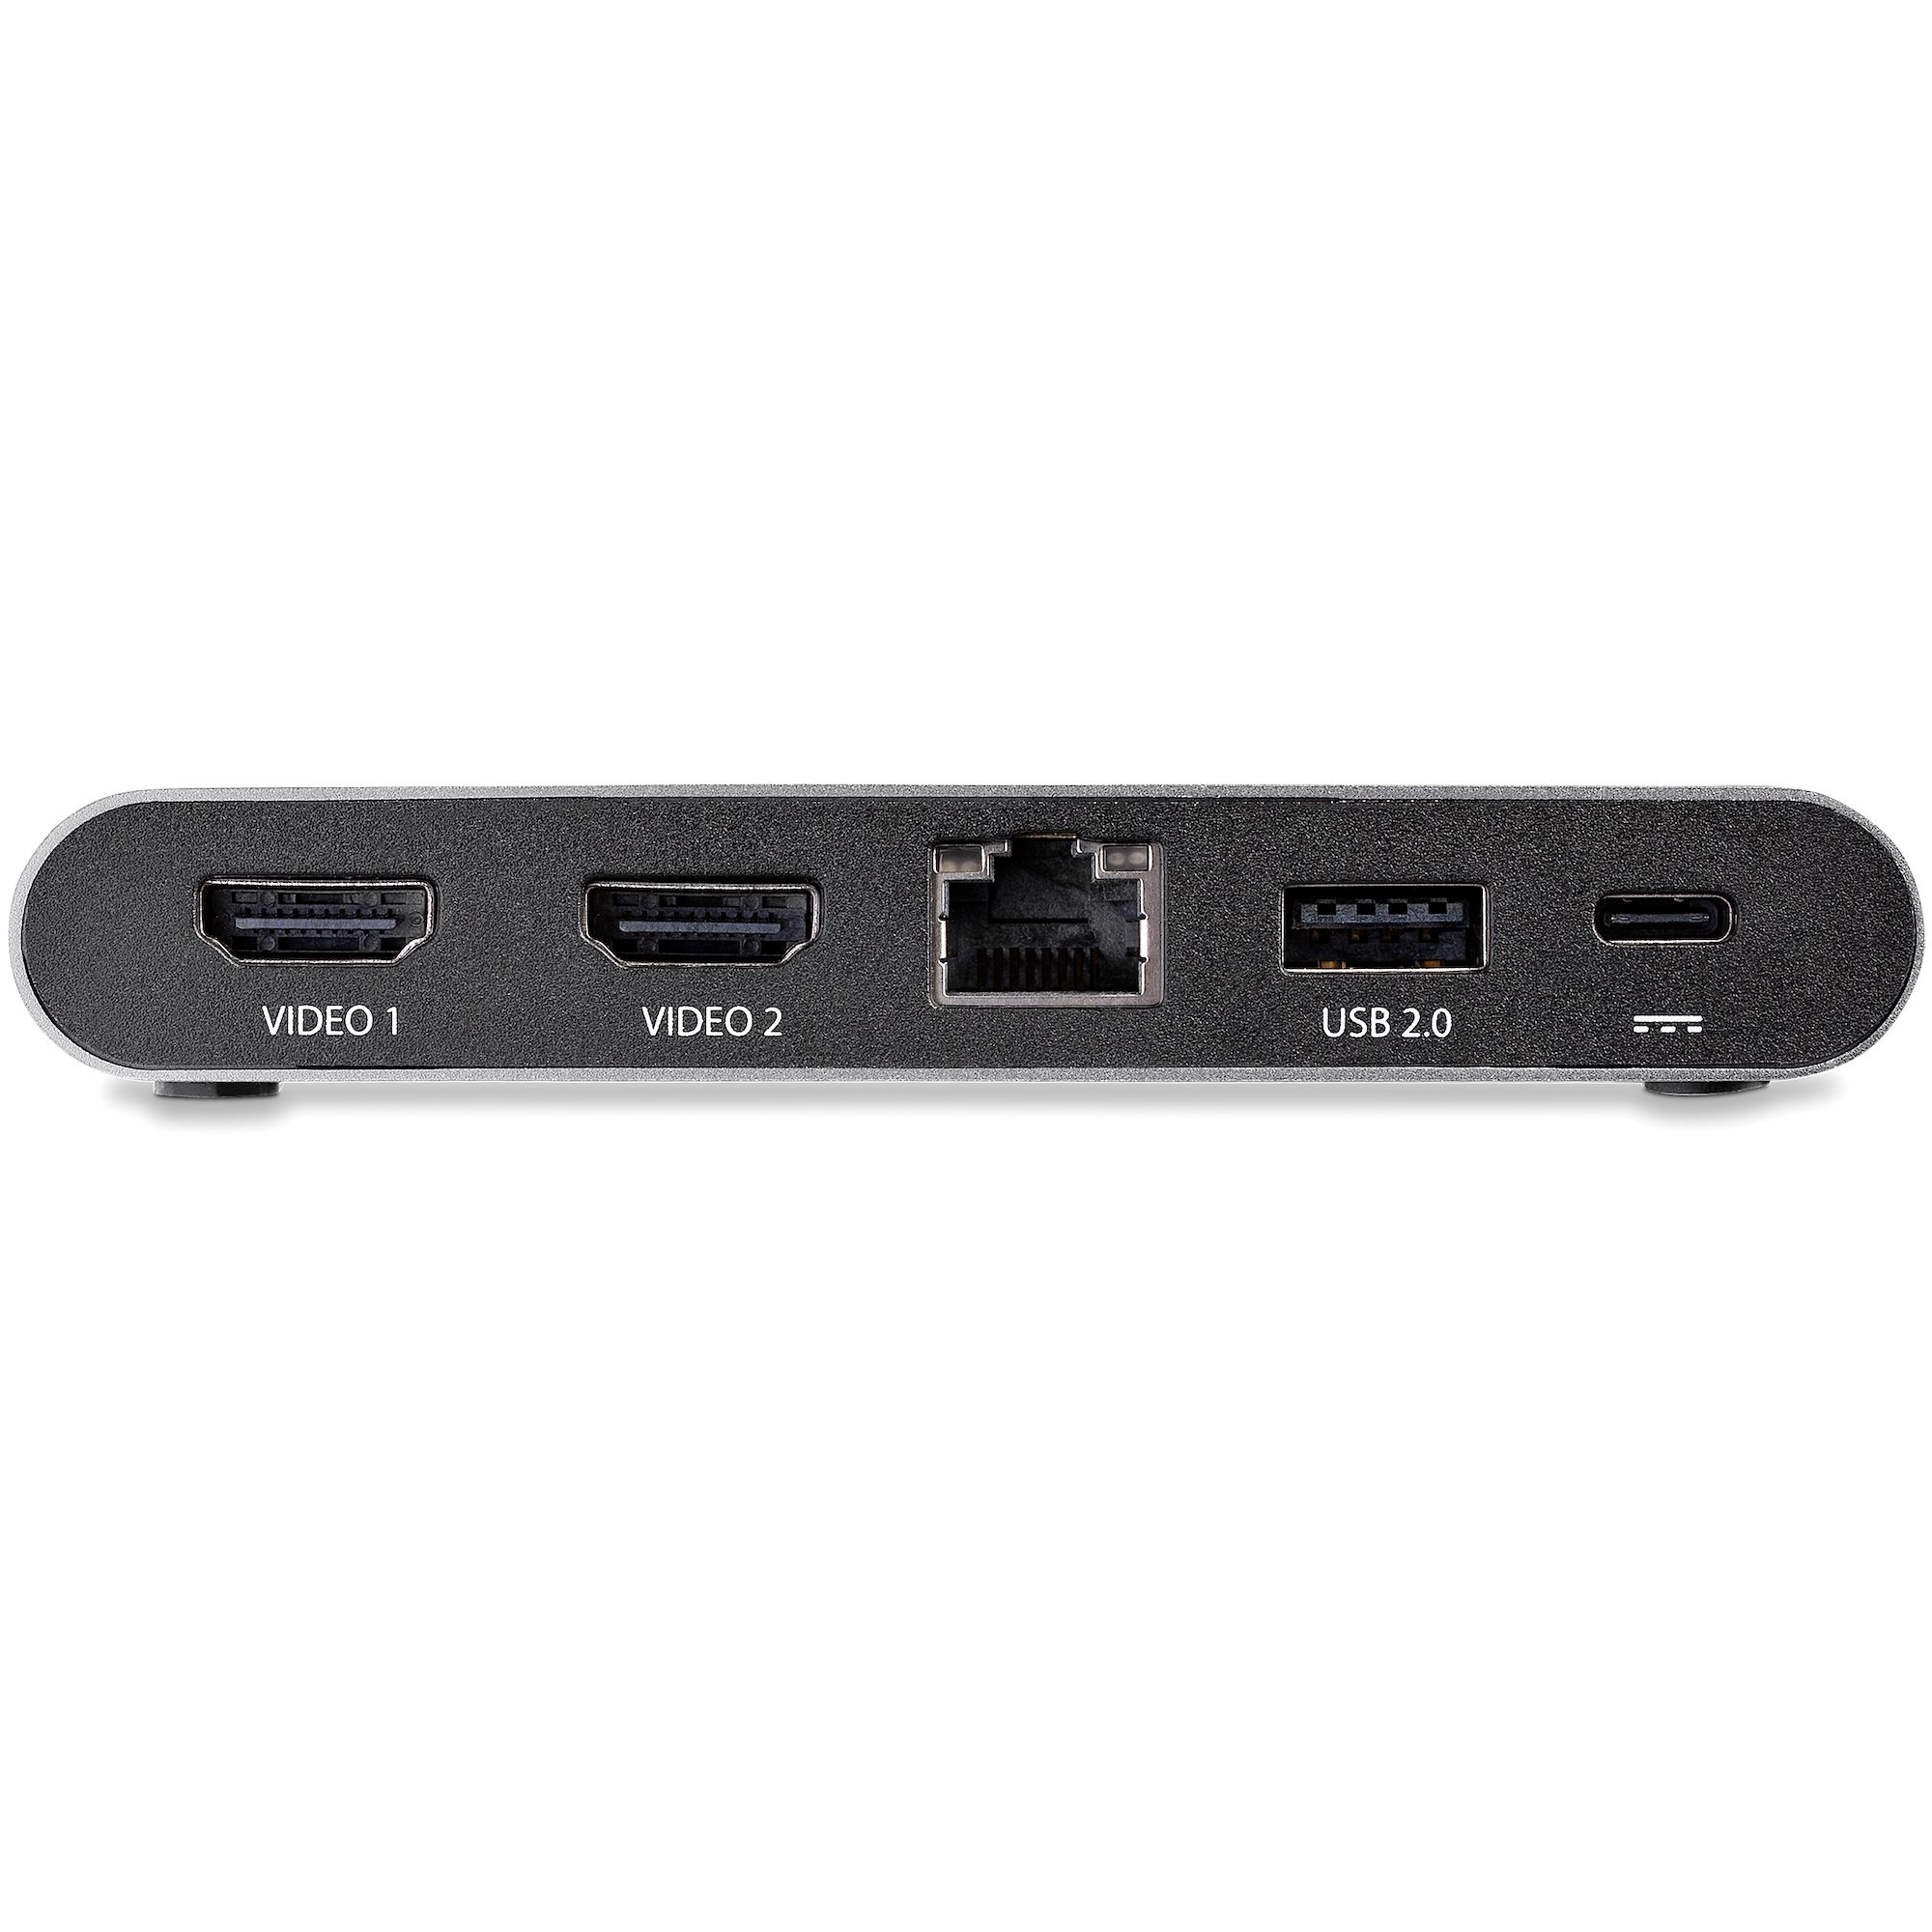 StarTech.com USB C Dock - 4K Dual Monitor HDMI USB-C Docking